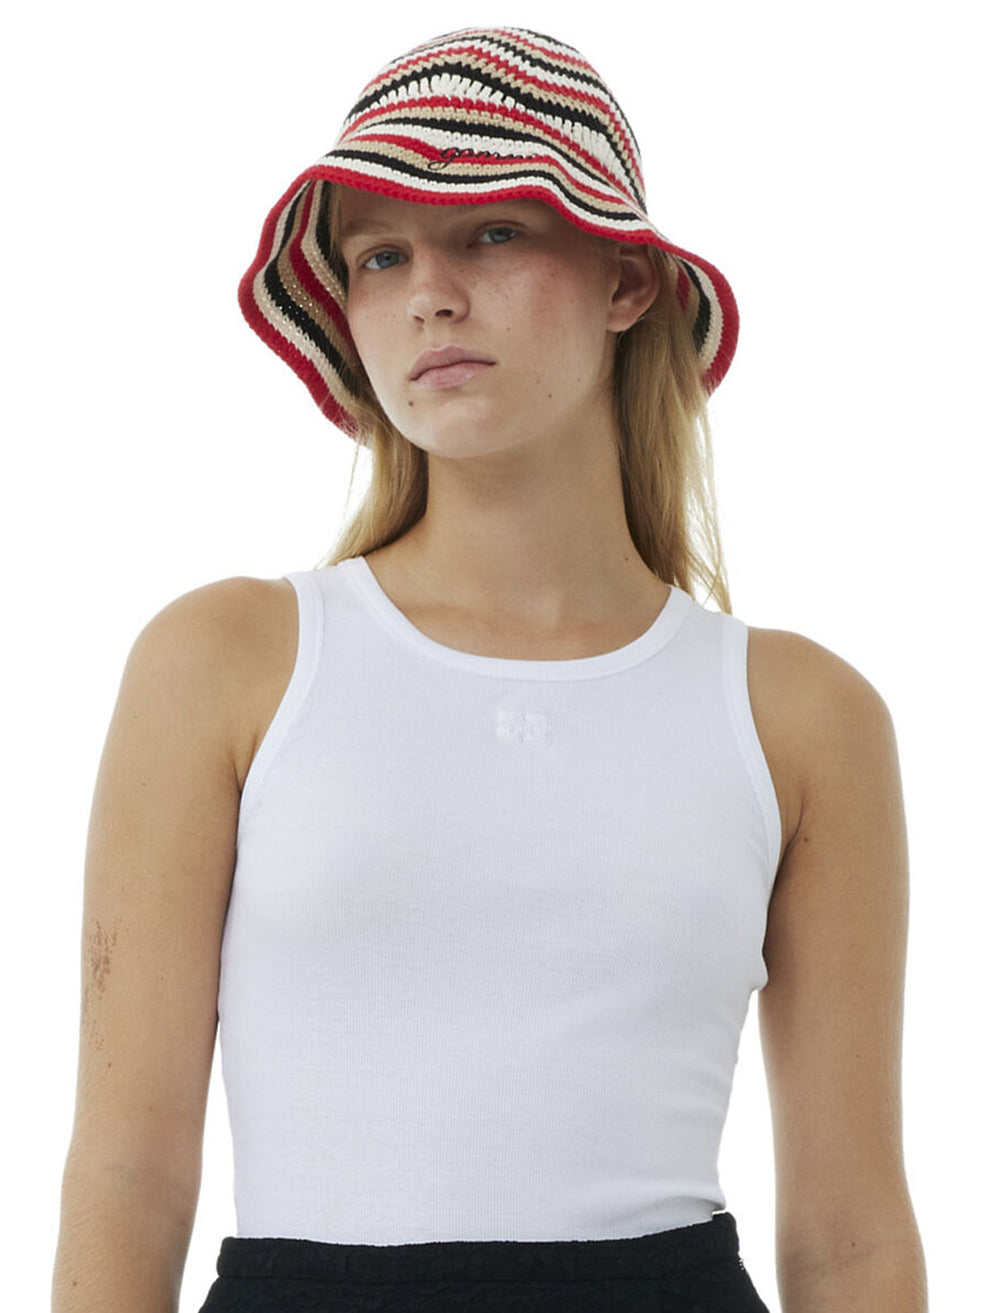 Model wearing GANNI's cotton crochet bucket hat in racing red.